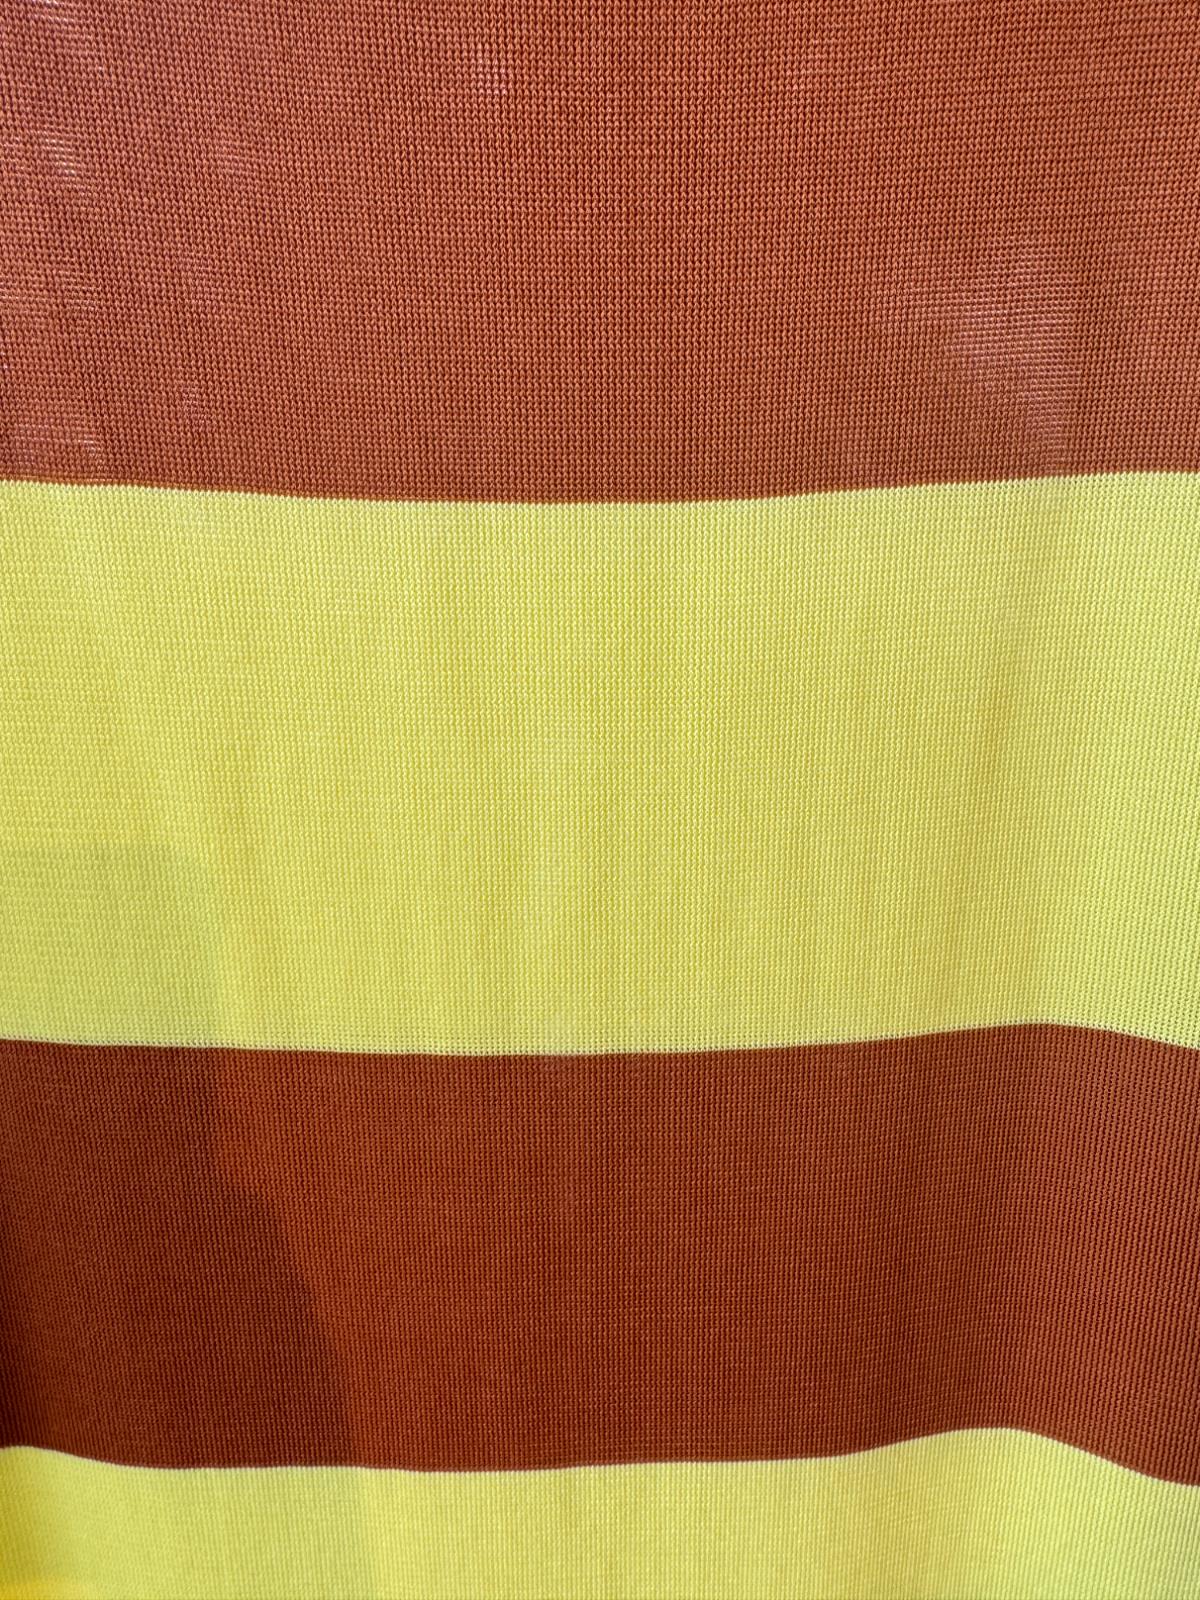 Zimmermann Midi Skirt | Charteuse, Viscose/Jersey, Yellow/Tan, Pencil, Stretch